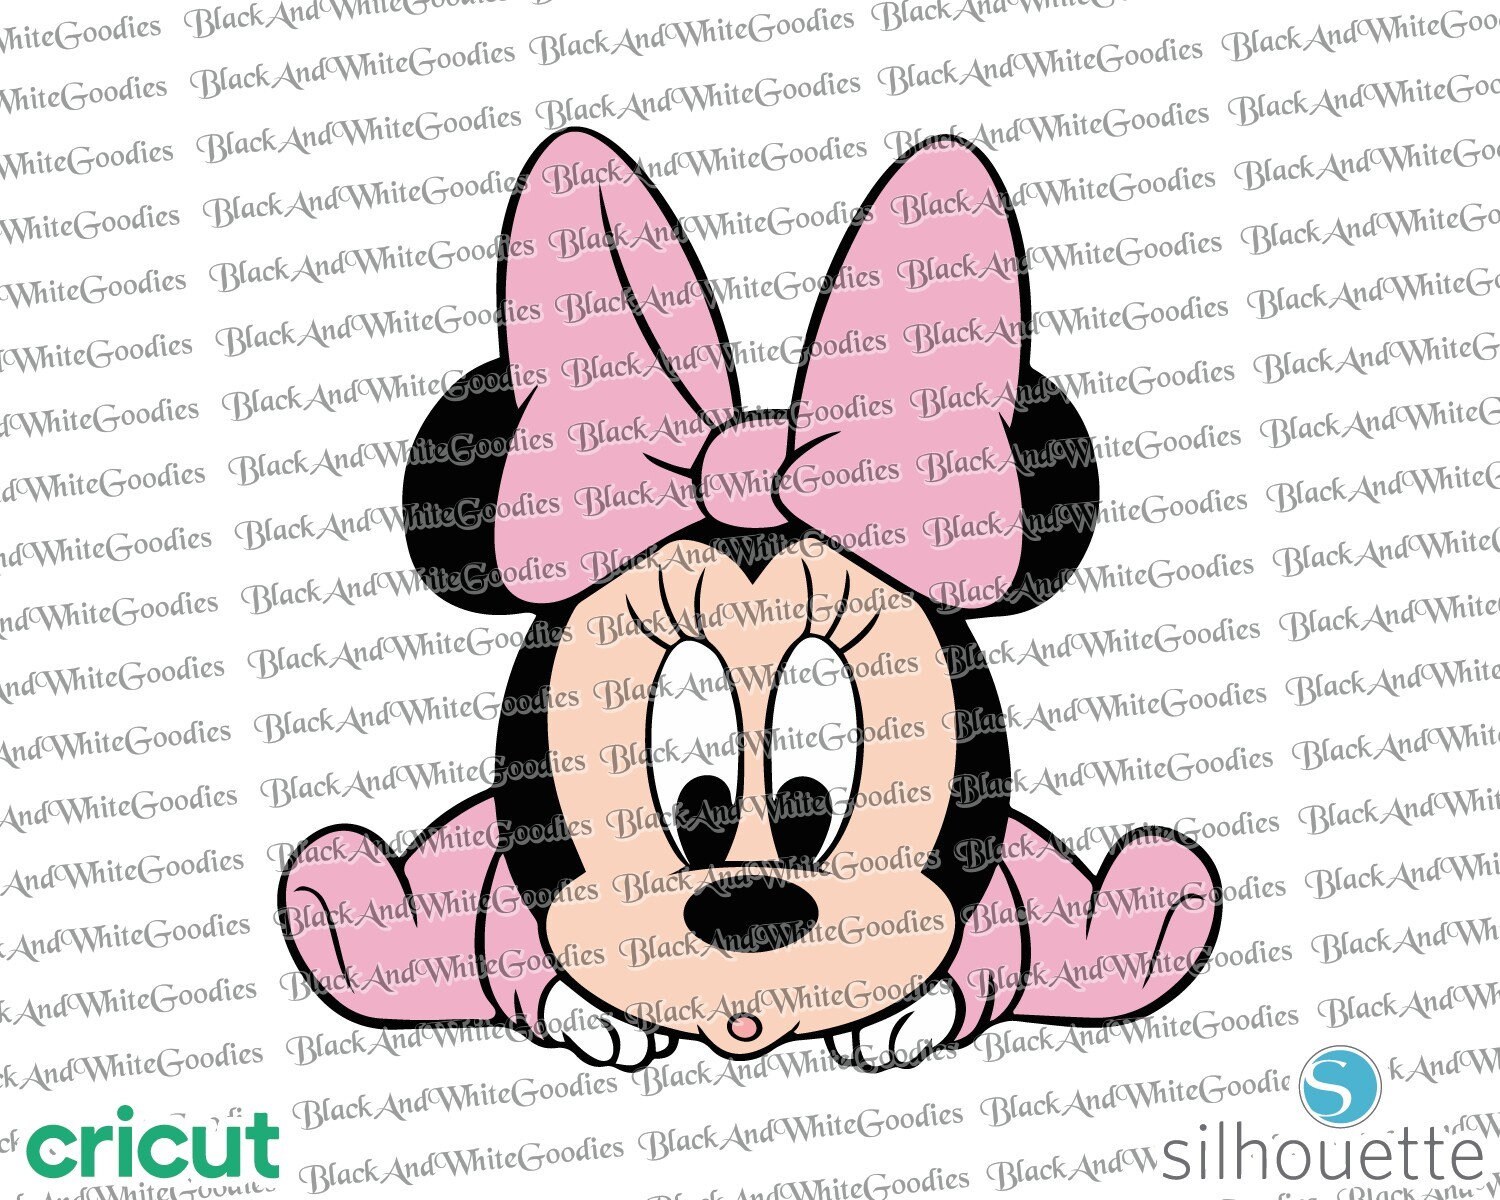 Disney Baby Minnie Mouse Gucci Bundle SVG Digital File